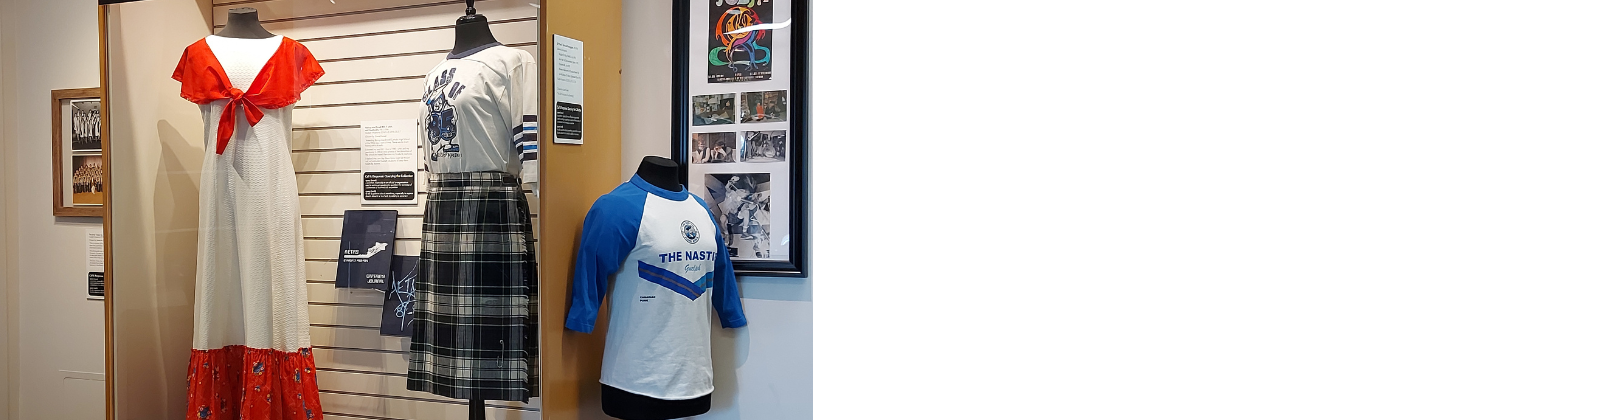 Exhibition installation view featuring a choir dress, a high school uniform plaid kilt and a t-shirt